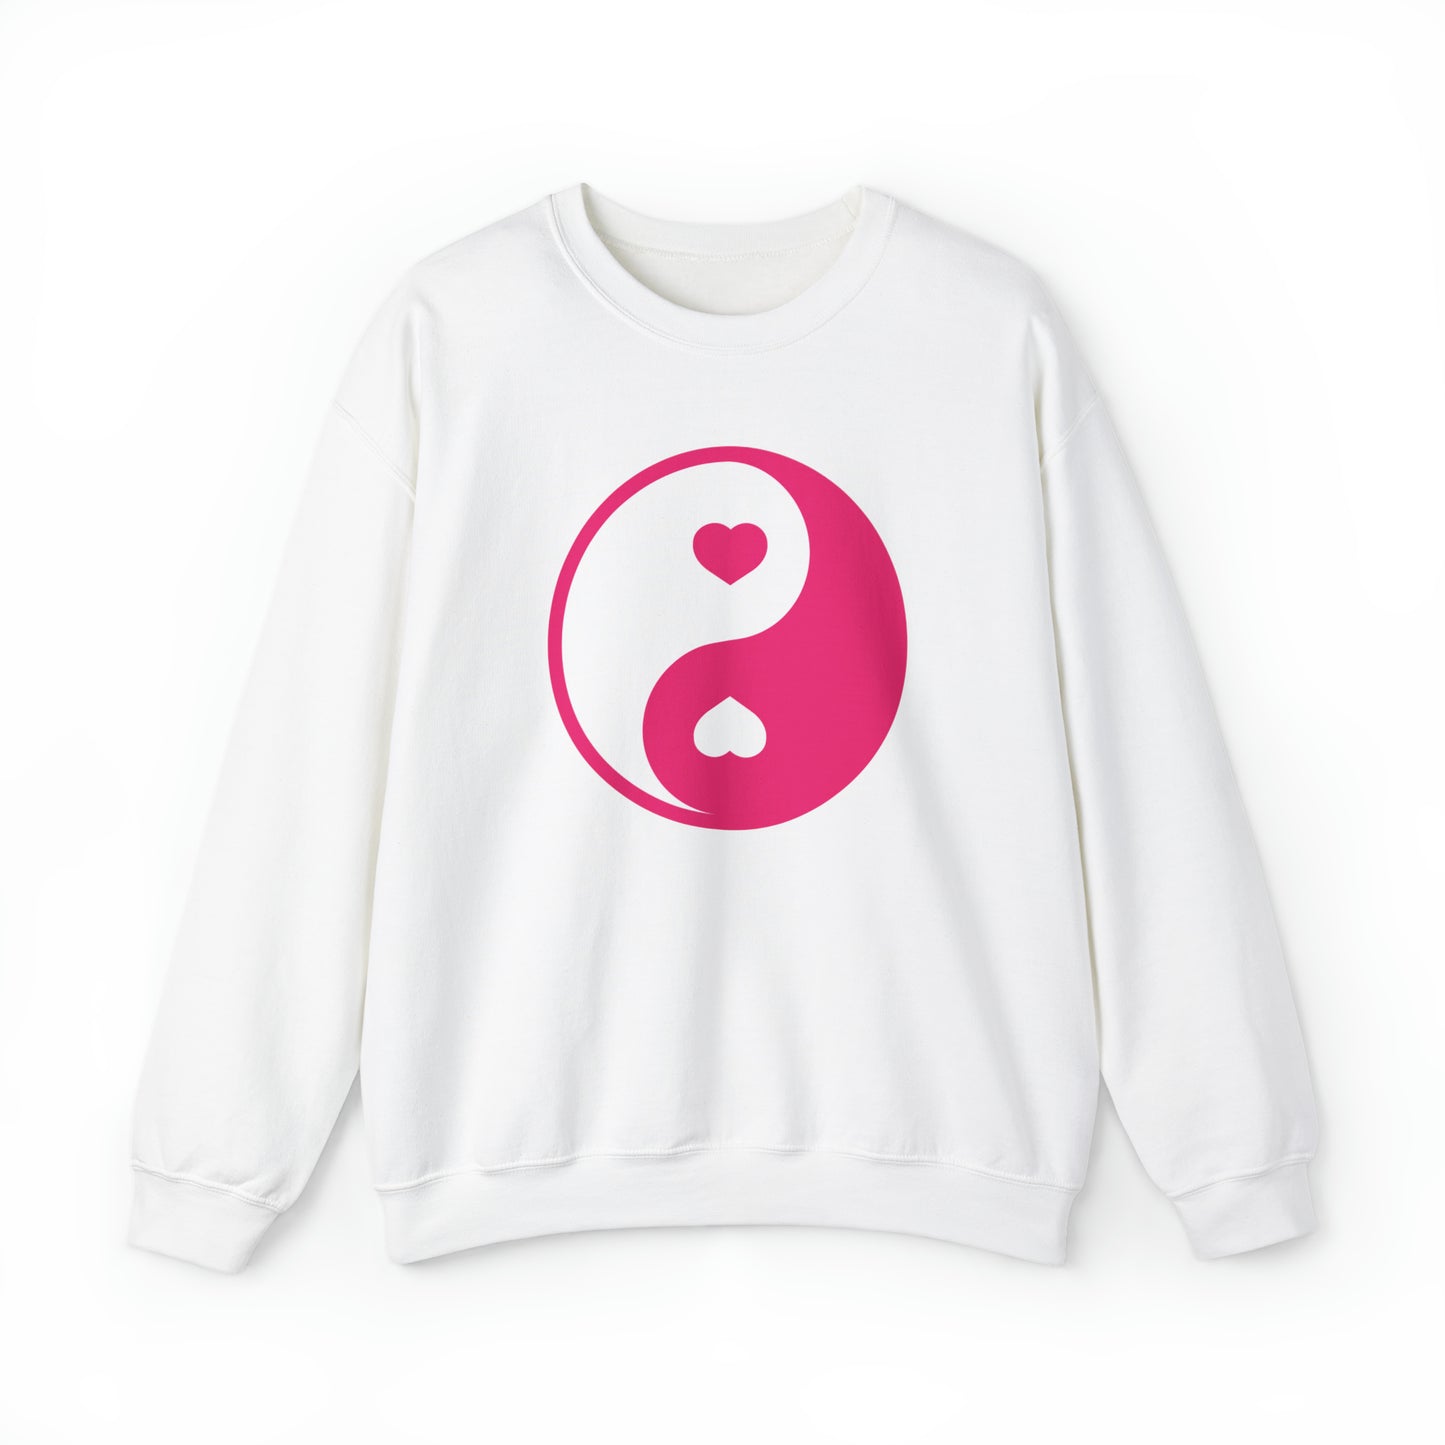 Harmony Hearts Yin Yang Sweatshirt